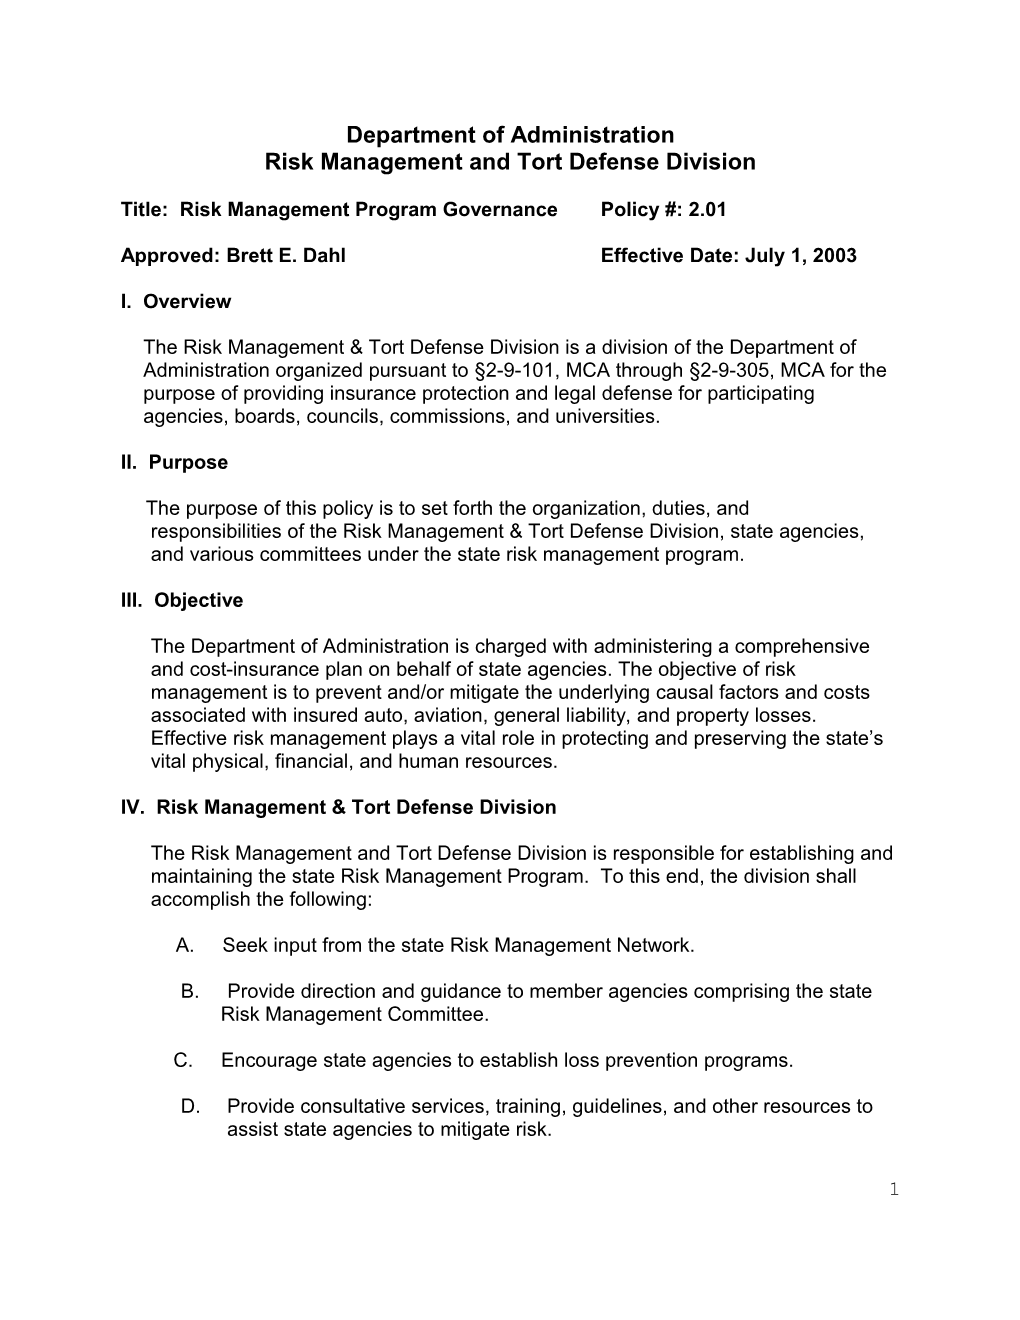 Risk Management and Tort Defense Division